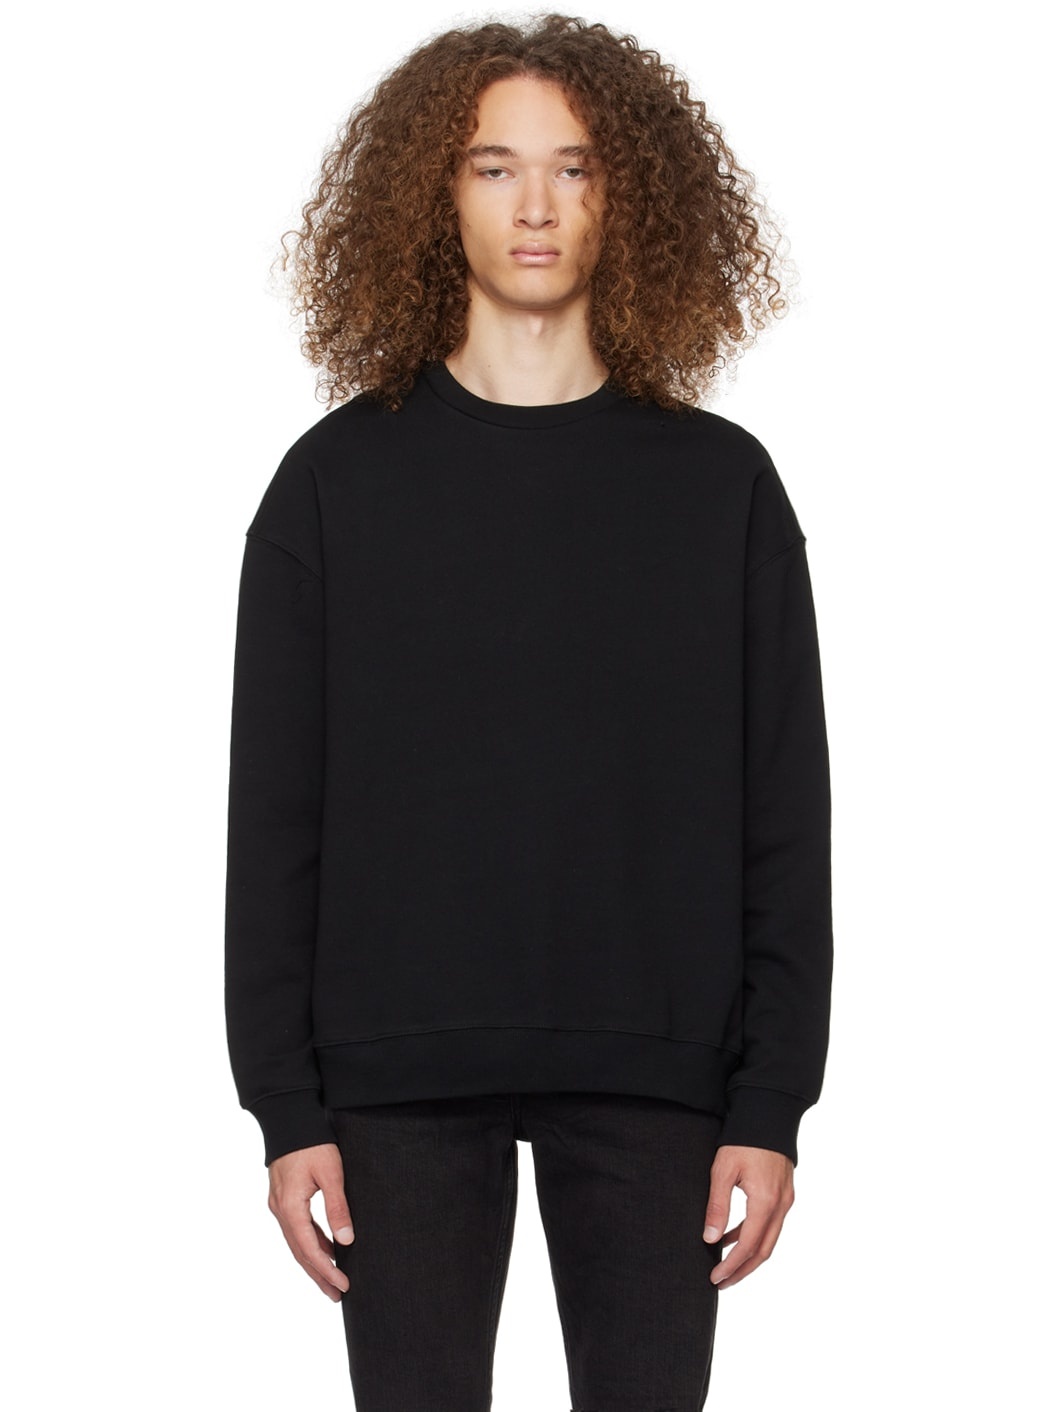 Black 4X4 Biggie Sweatshirt - 1